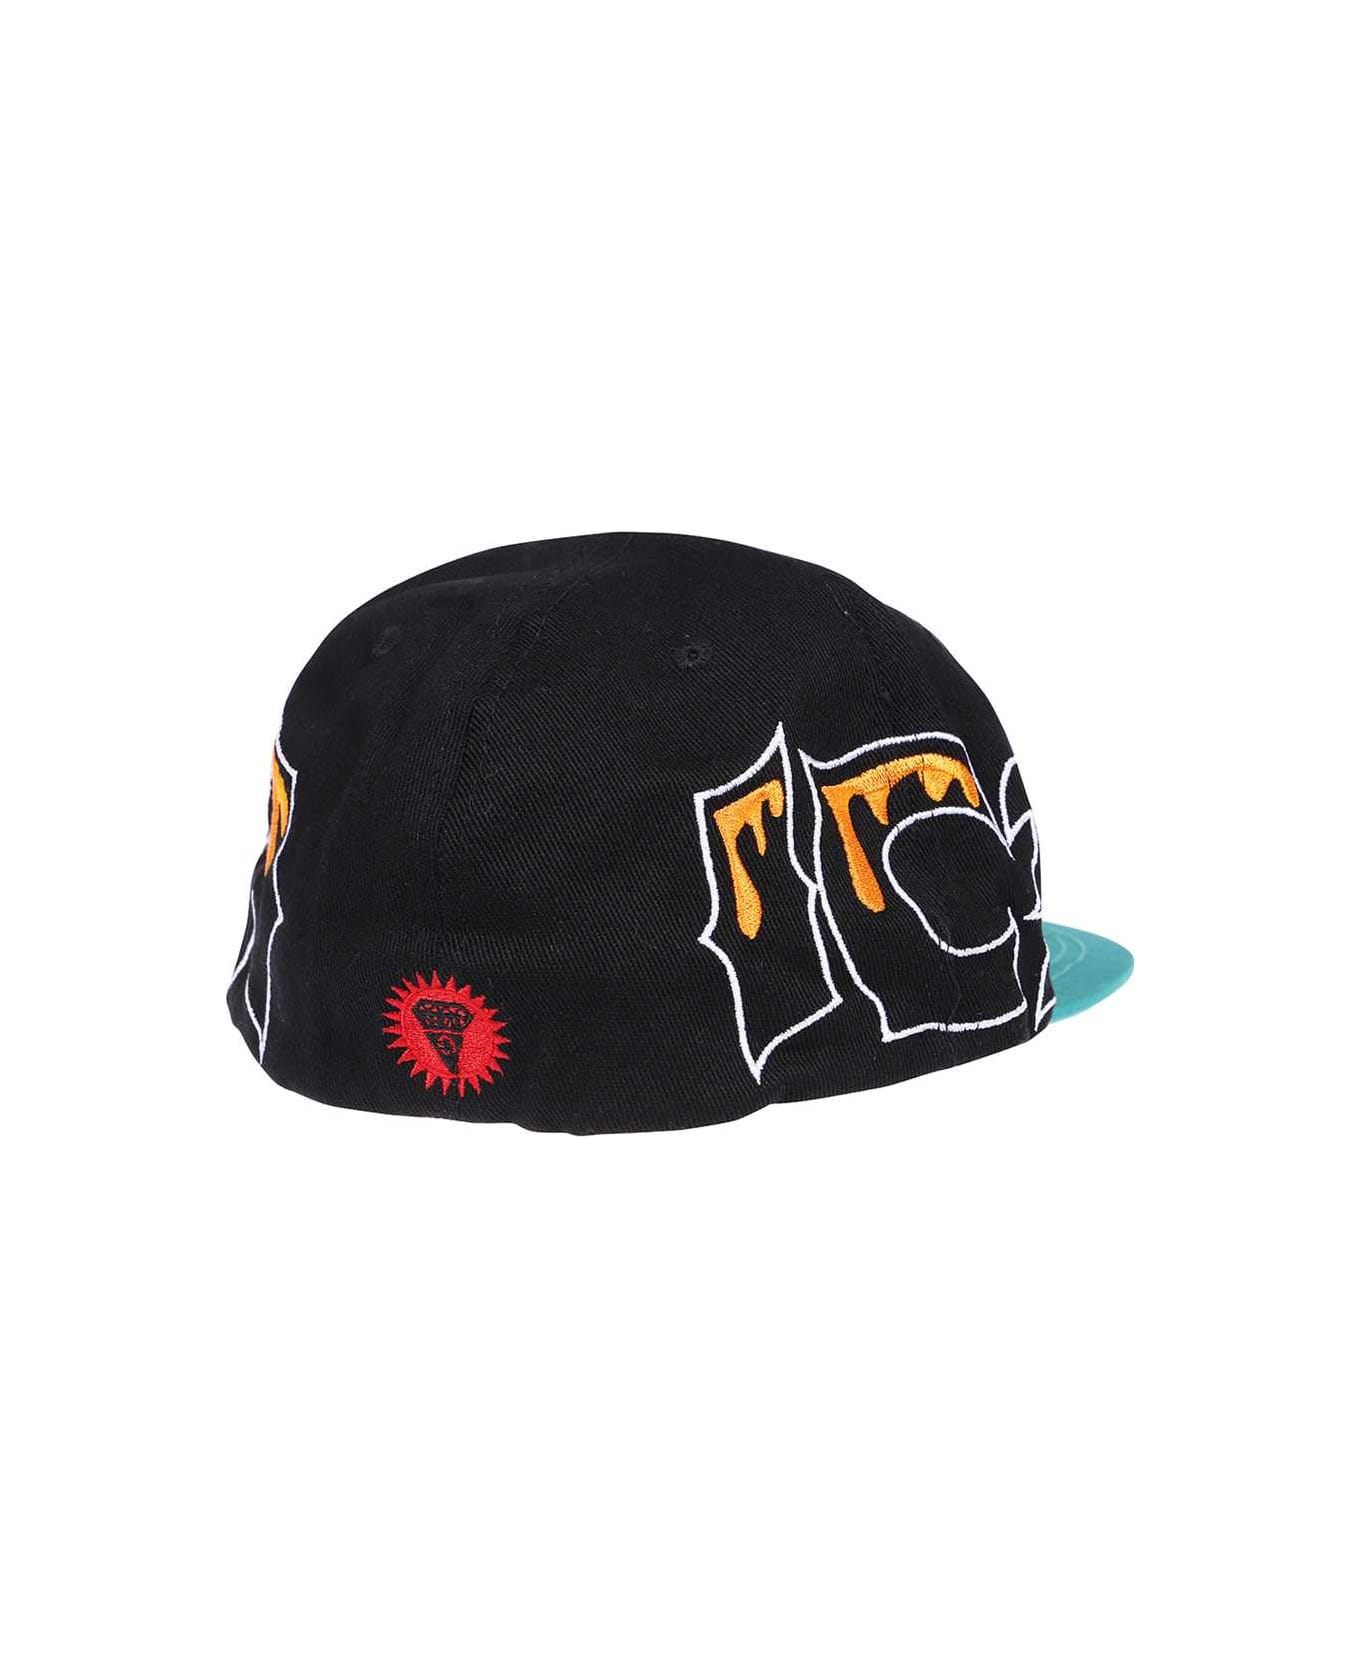 Icecream Baseball Hat With Flat Visor - black